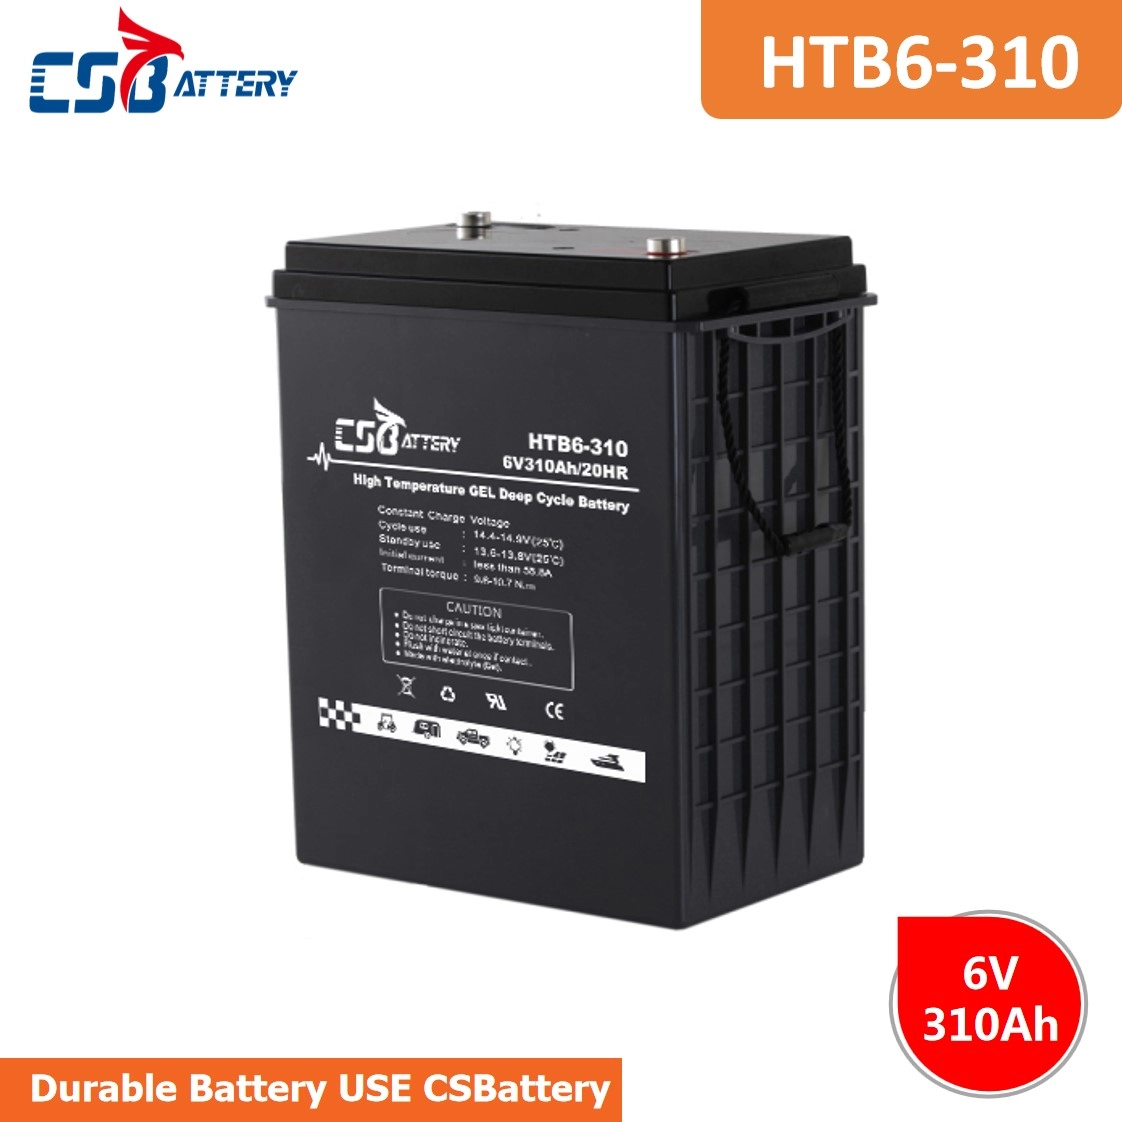 HTB6-310 6V 310AH High-Temp Deep Cycle Batteries